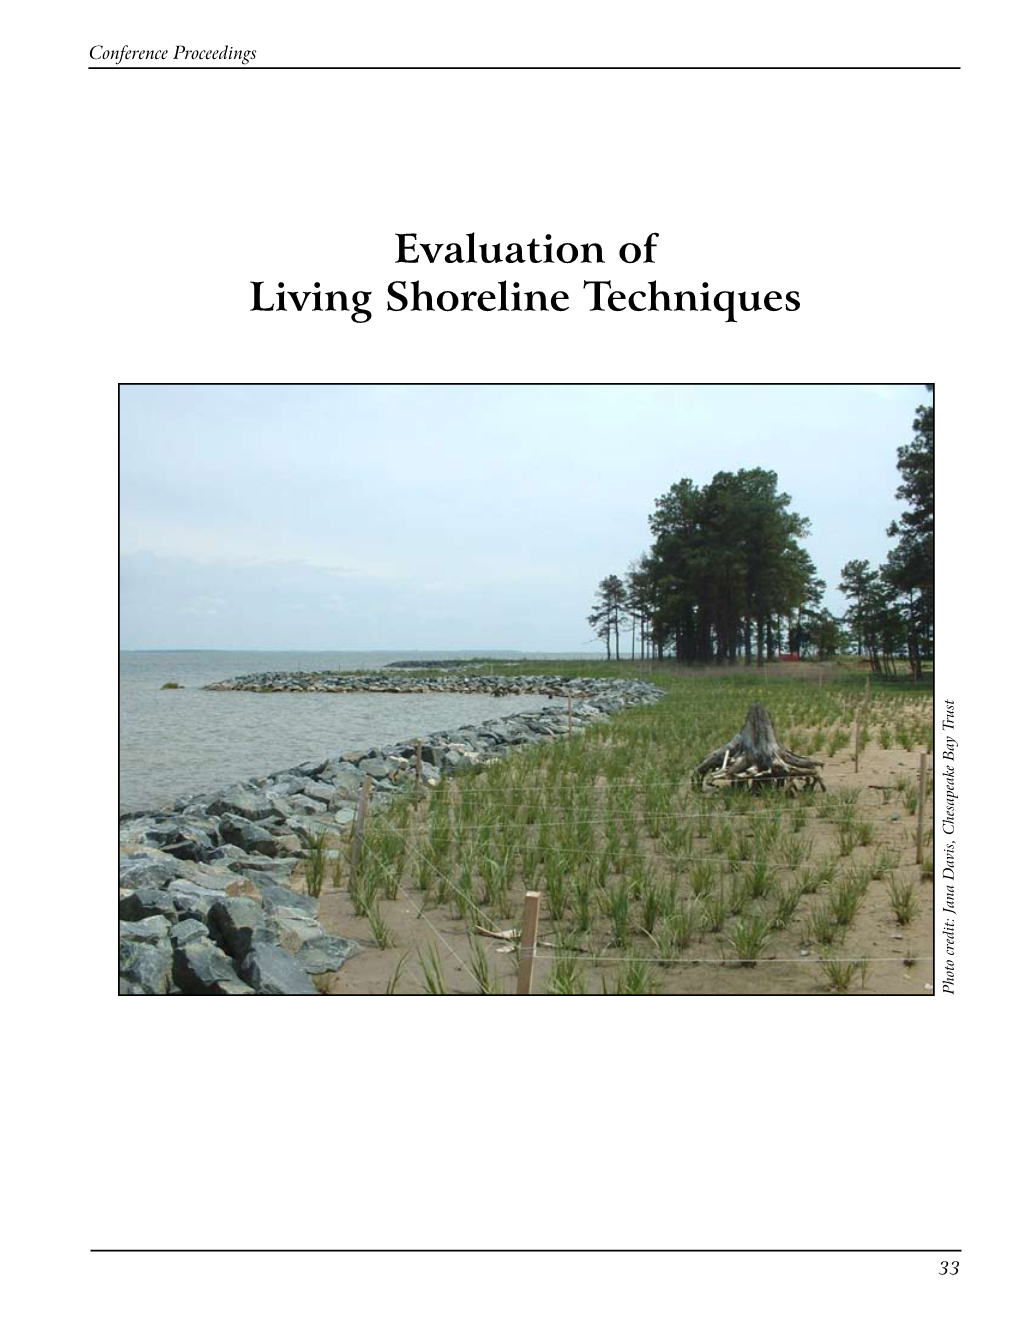 Evaluation of Living Shoreline Techniques Photo Credit: Jana Davis, Chesapeake Bay Trust